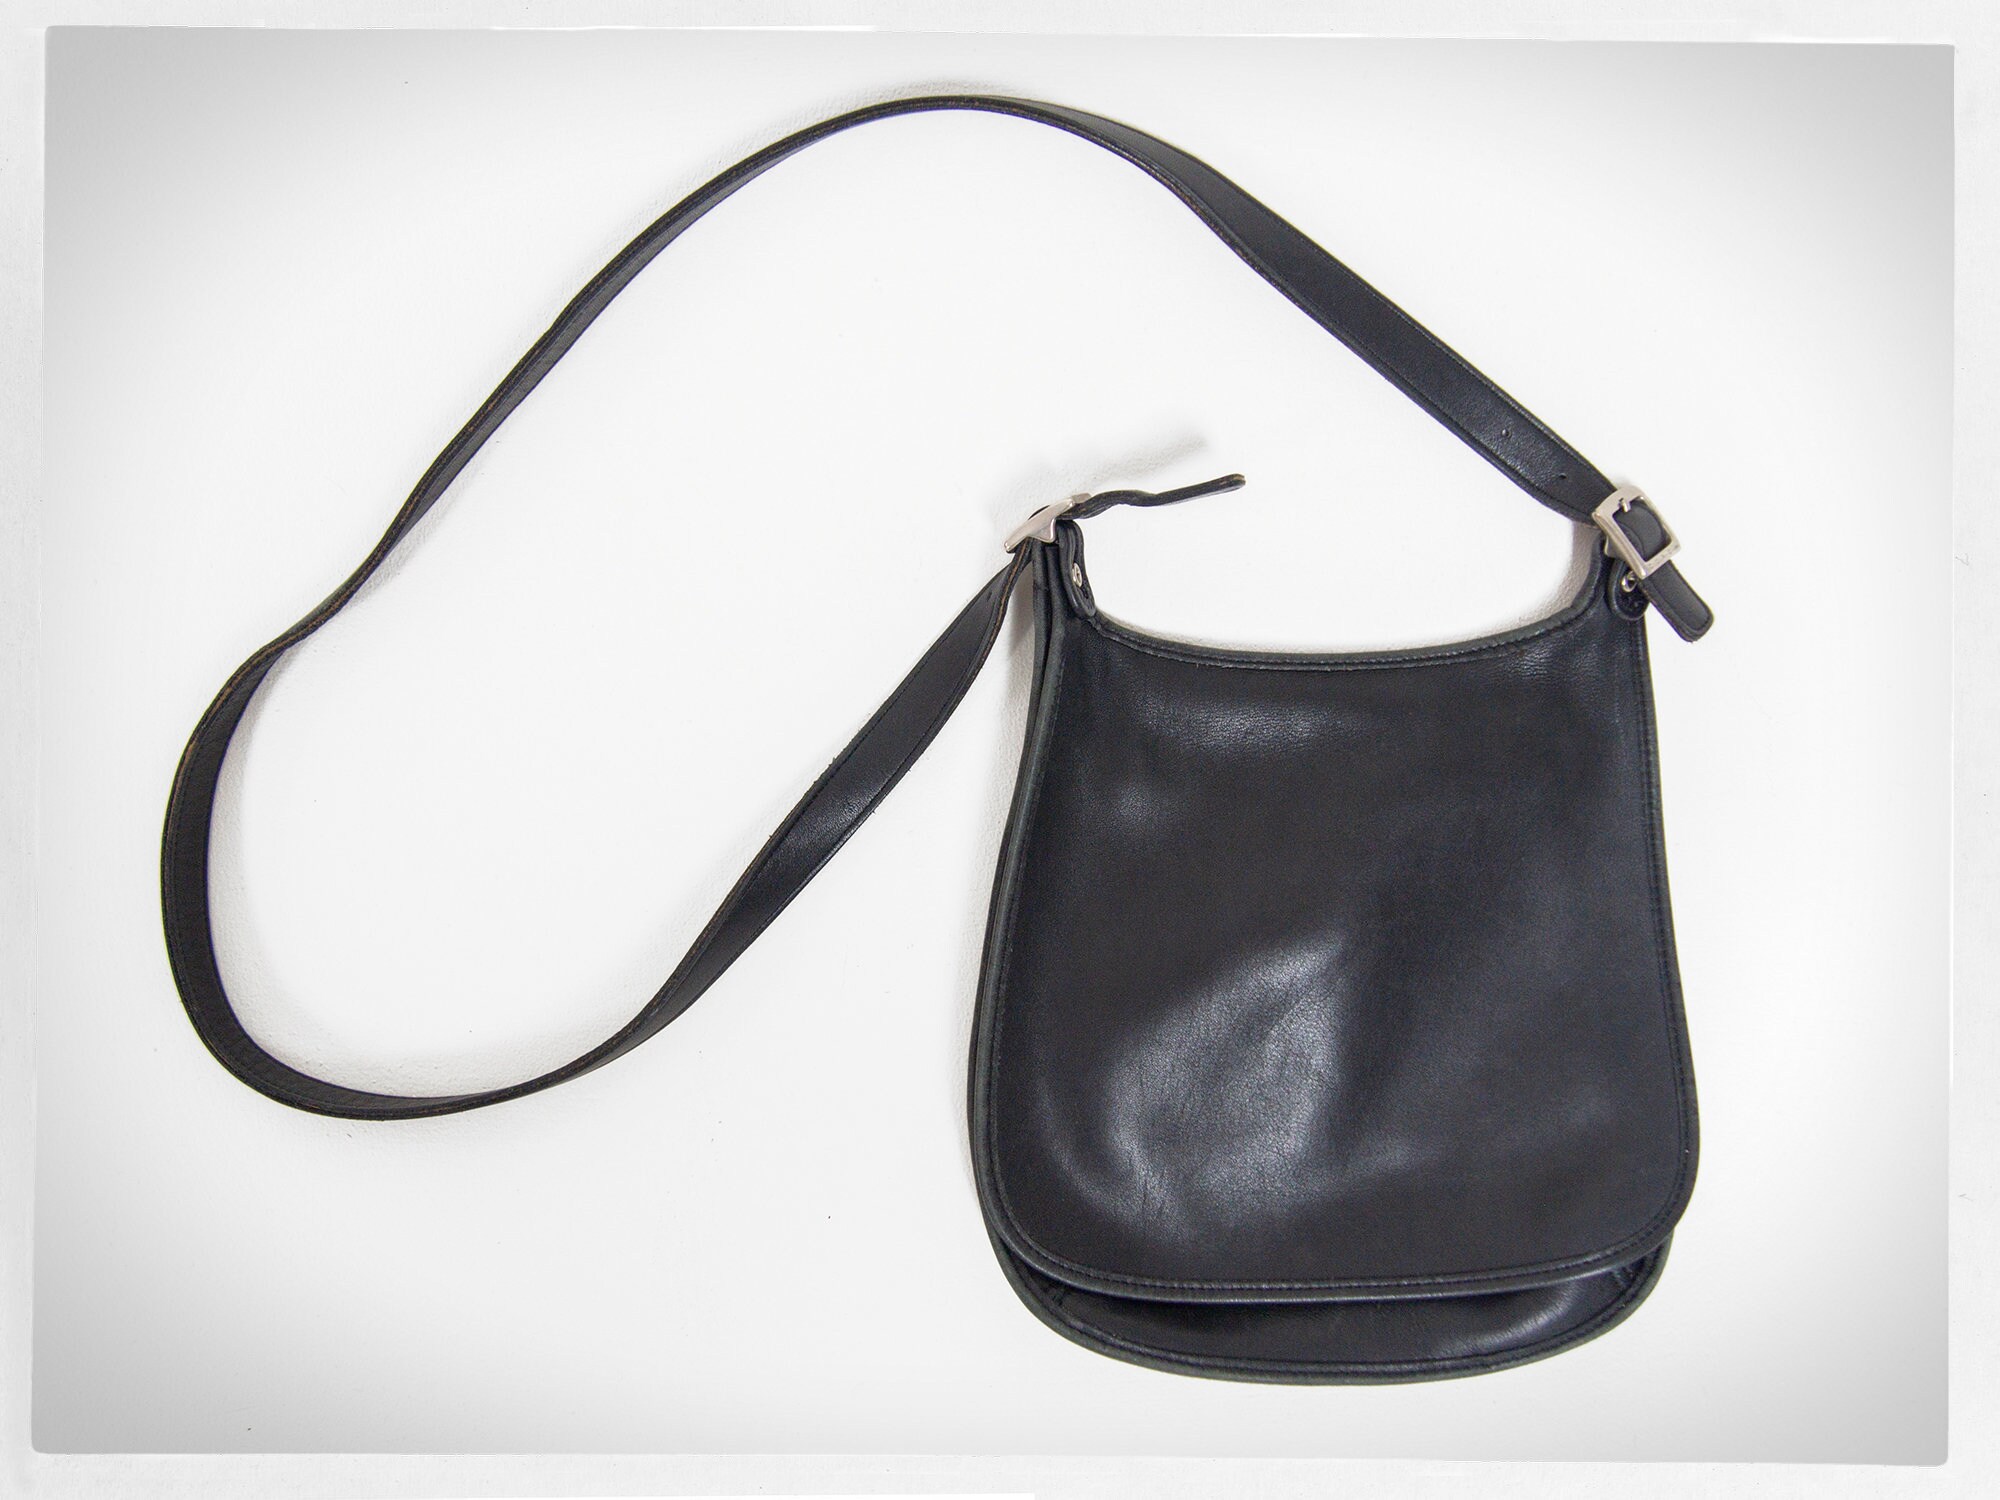 Louis Feraud Paris Vintage 1980s Handbag Crossbody Purse Tan 